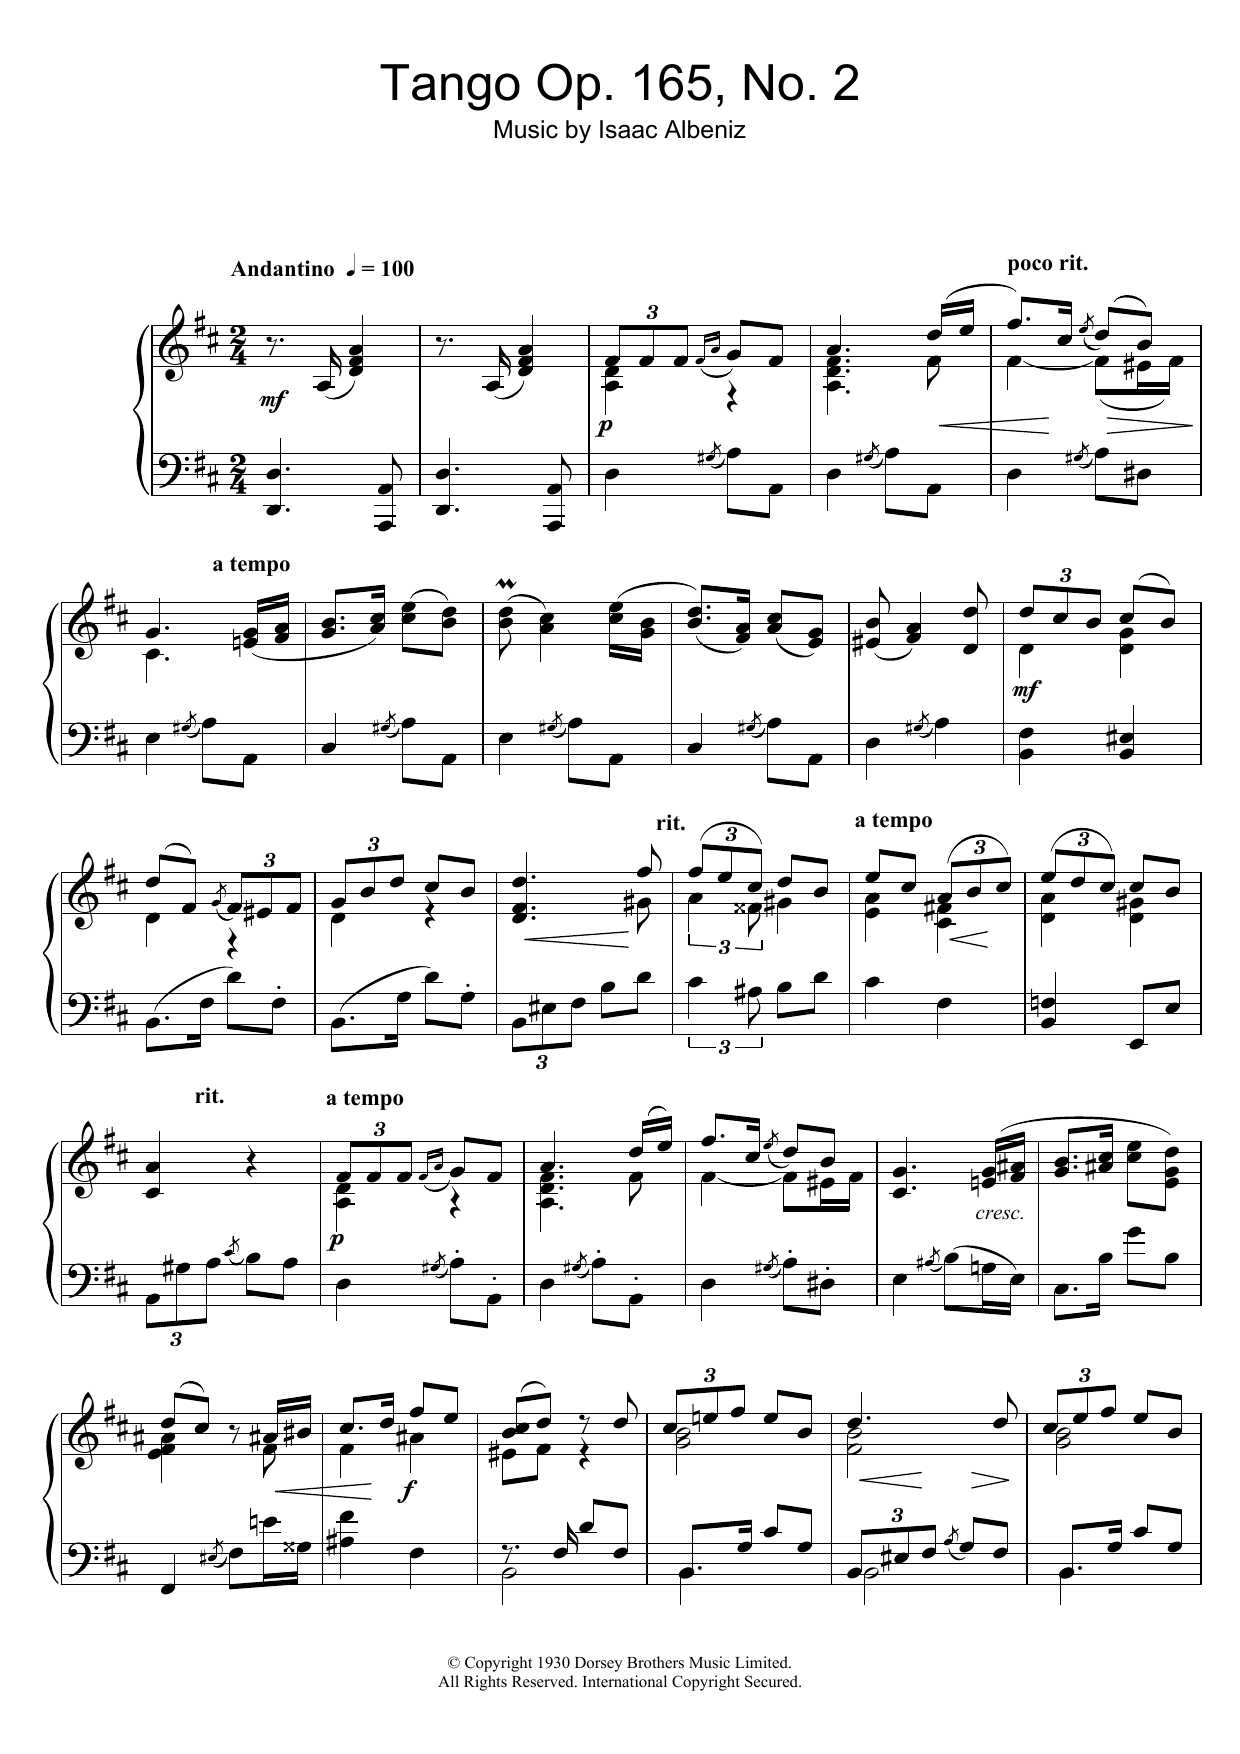 Isaac Albéniz Tango Op. 165, No. 2 Sheet Music Notes & Chords for Piano - Download or Print PDF